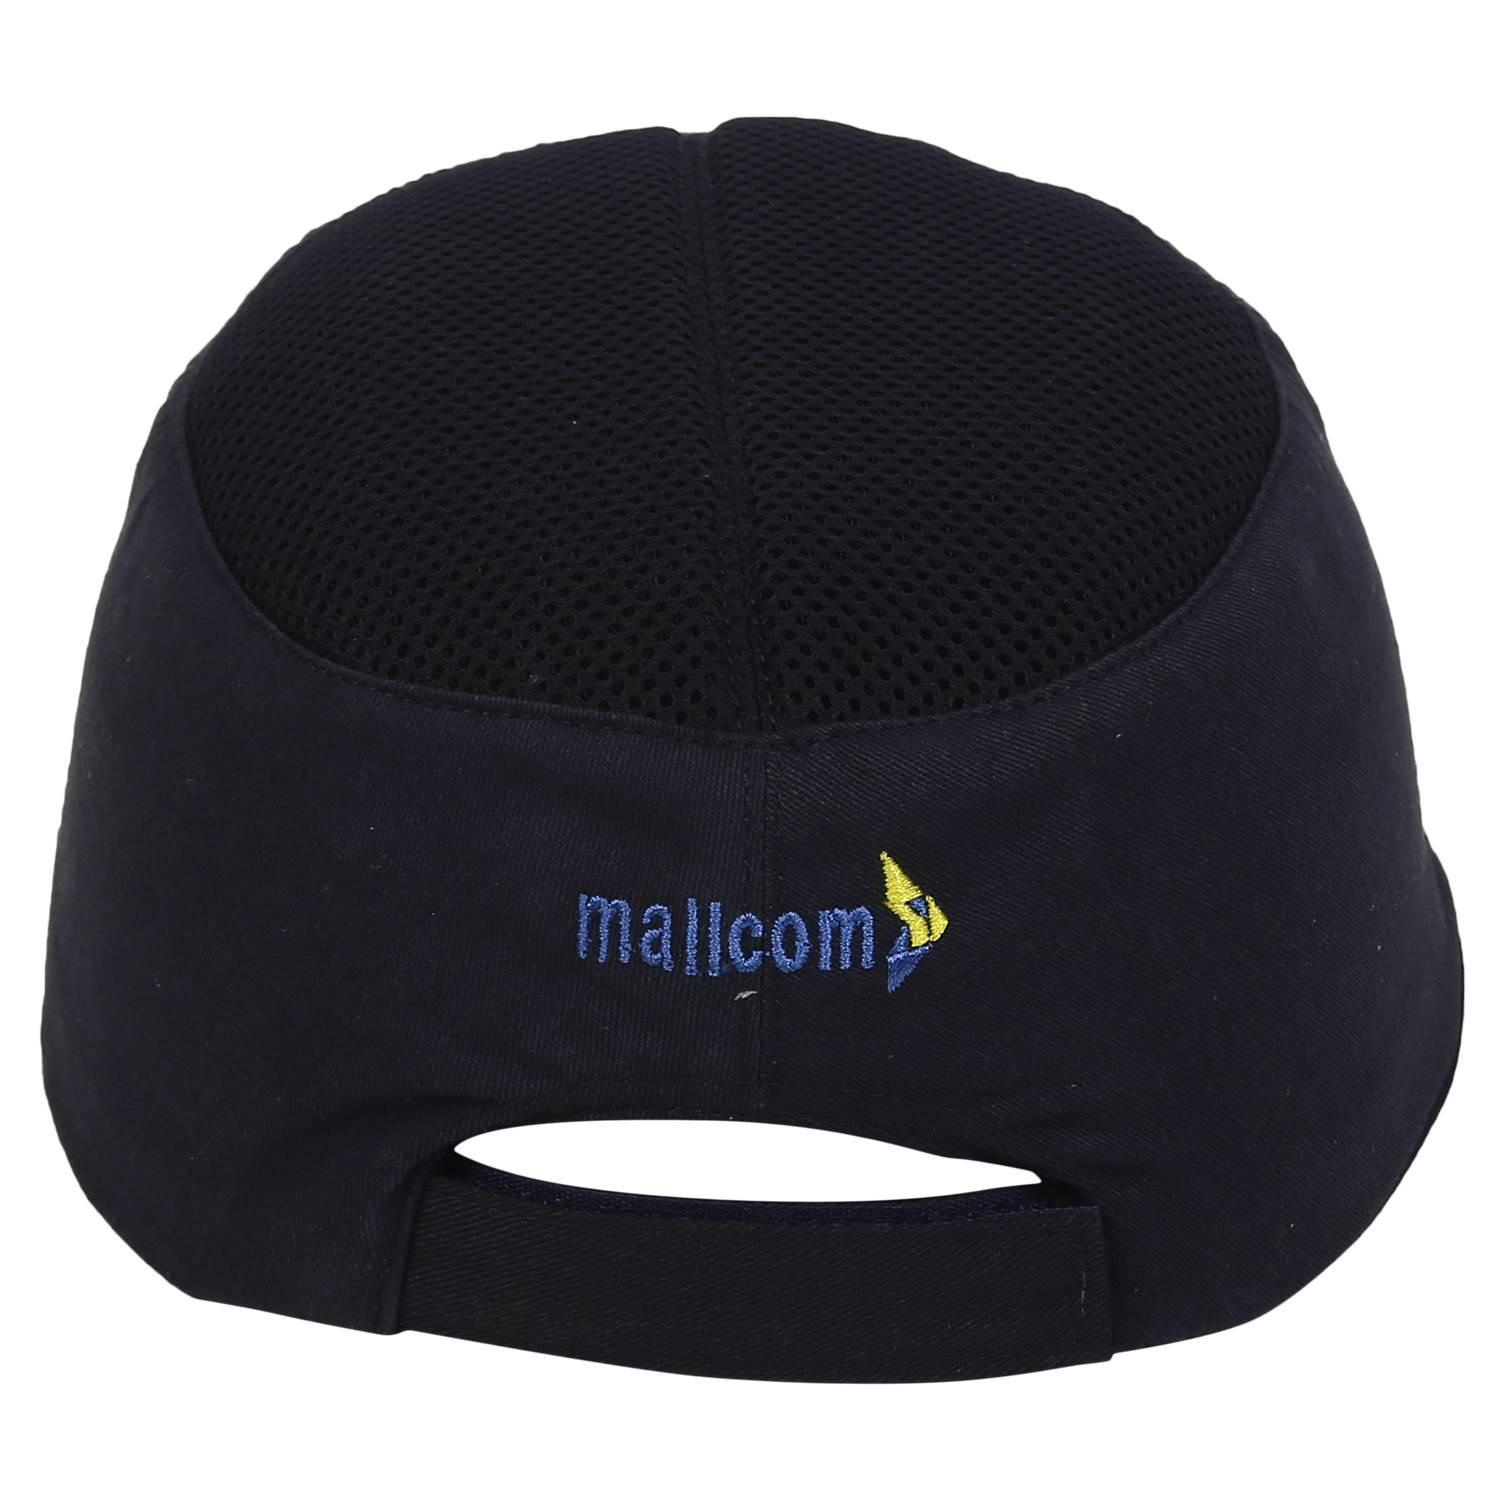 MALLCOM Topaz SP-B Bump Cap